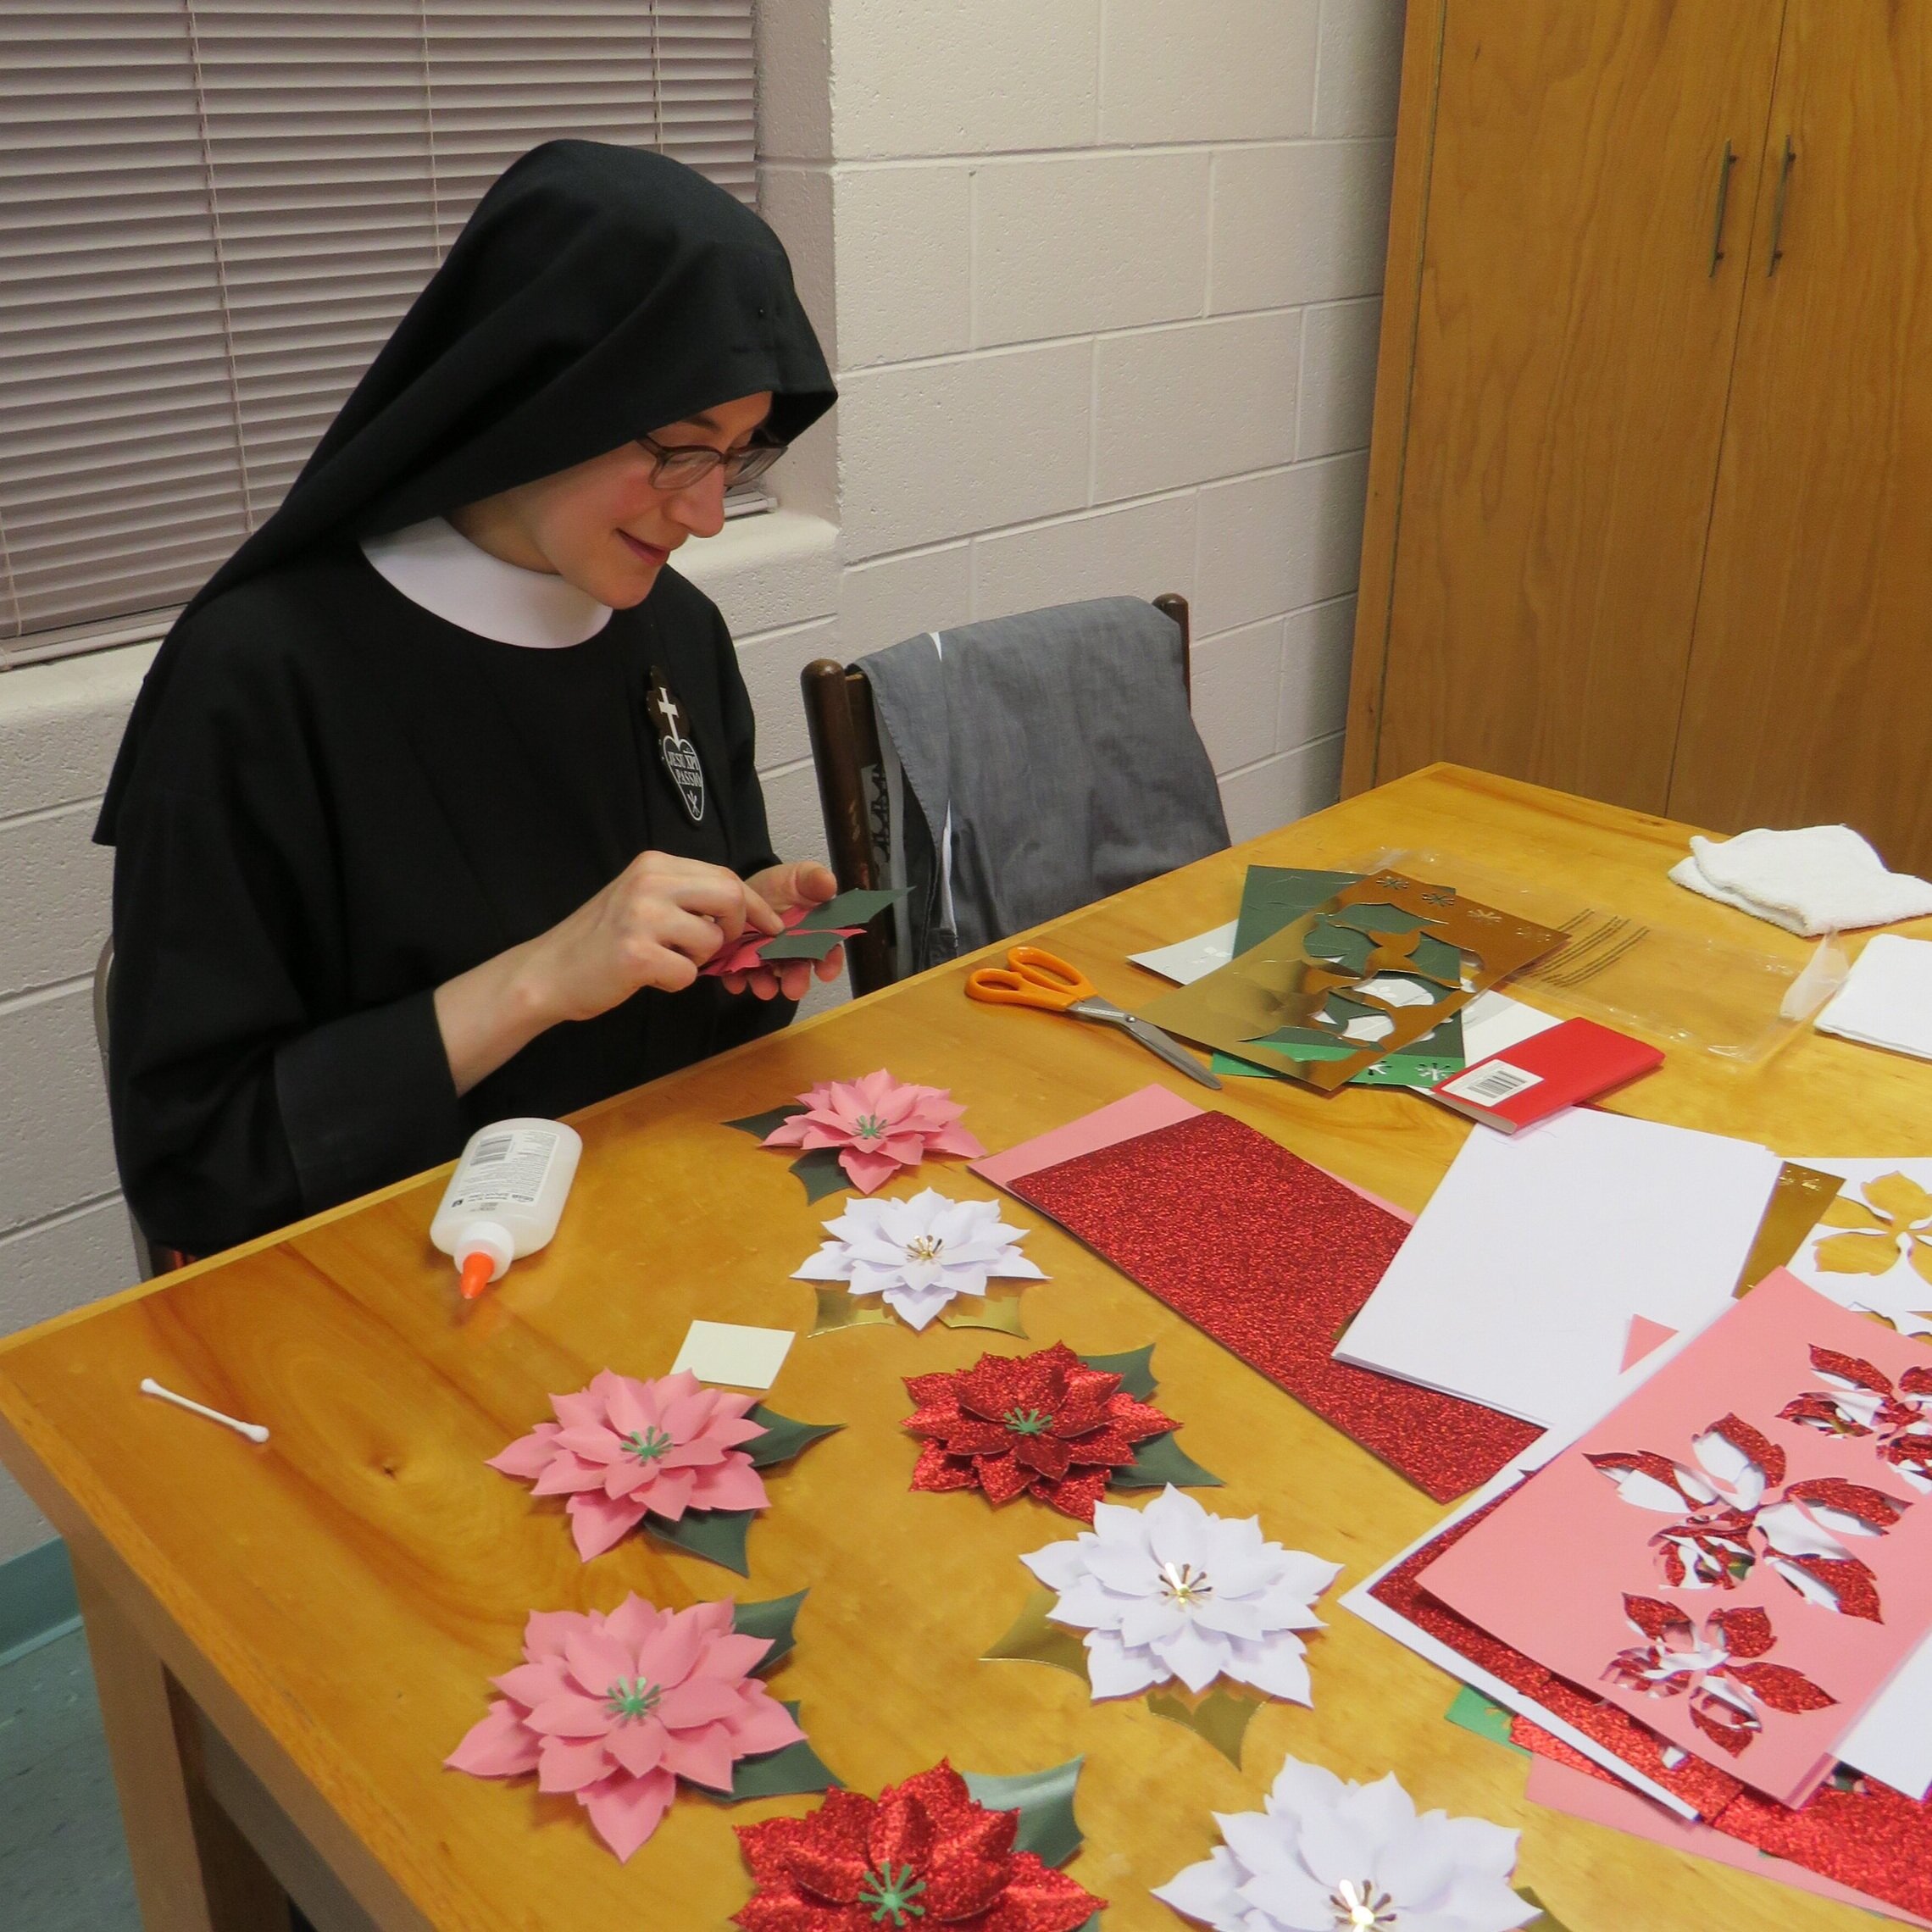  Sr. Lucia Marie (making paper poinsettia decorations) 